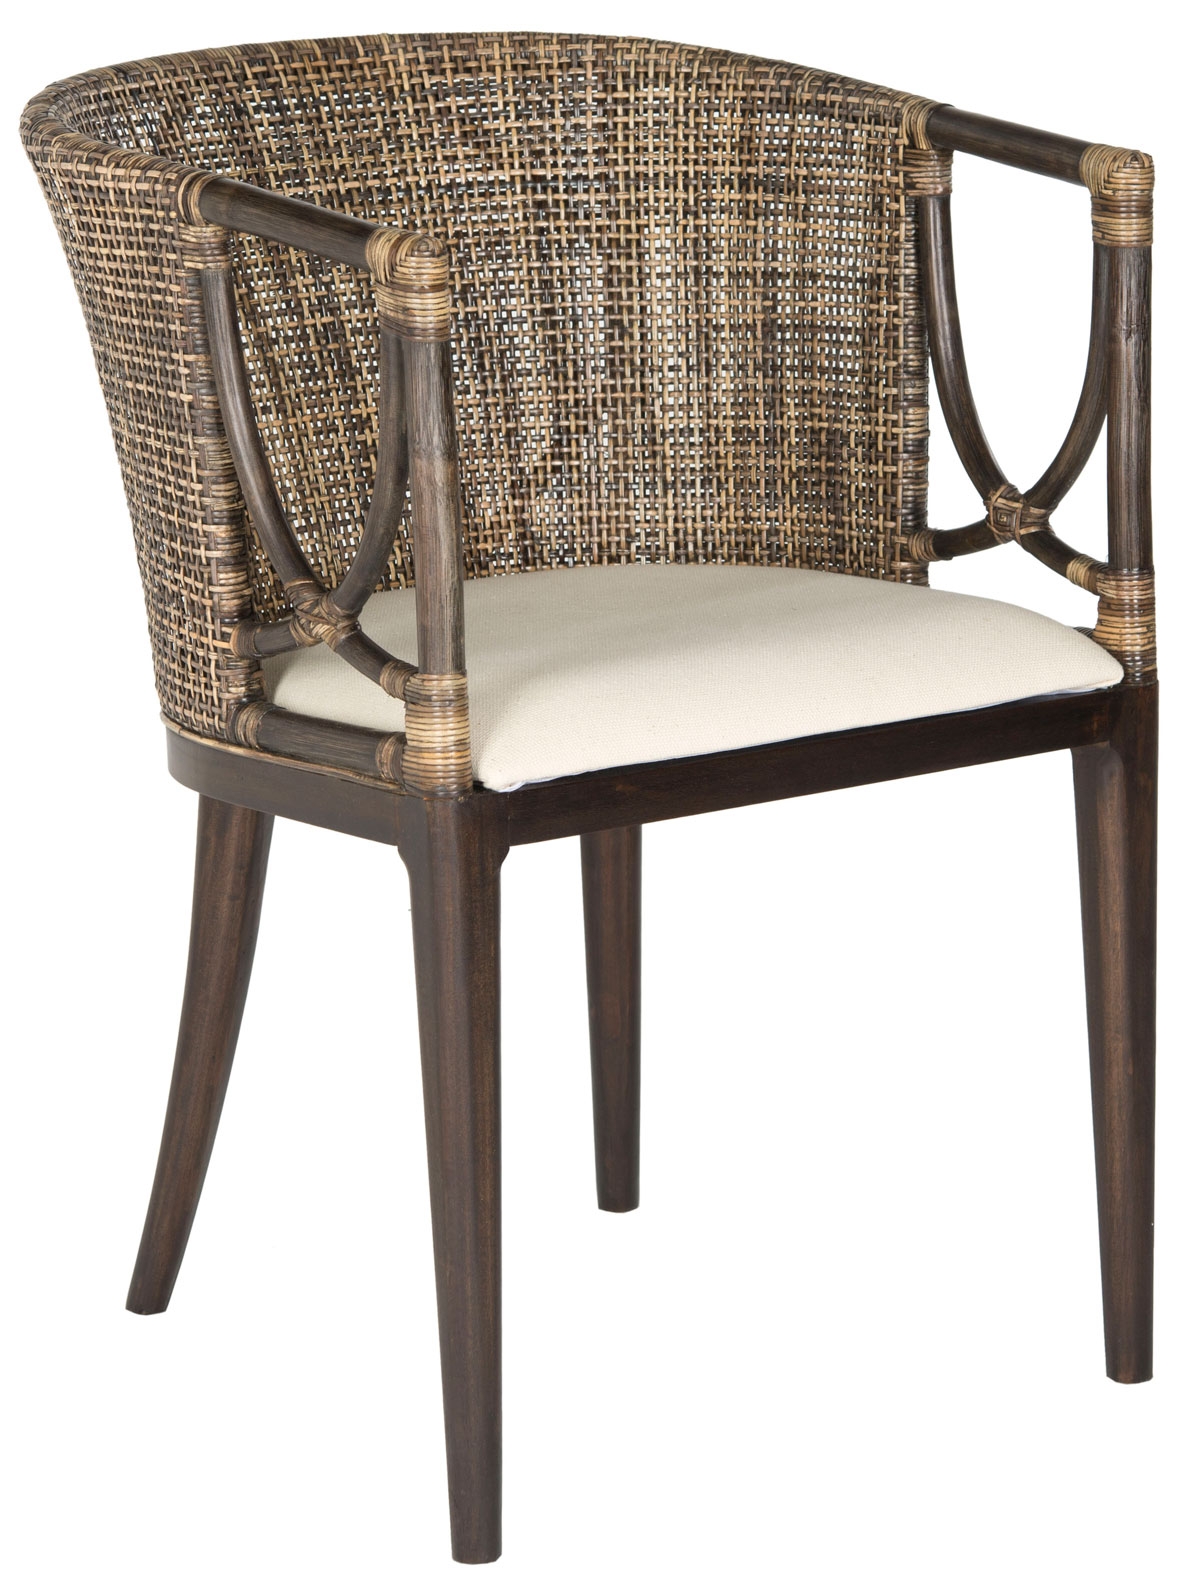 Beningo Arm Chair - Brown/Black - Arlo Home - Image 1